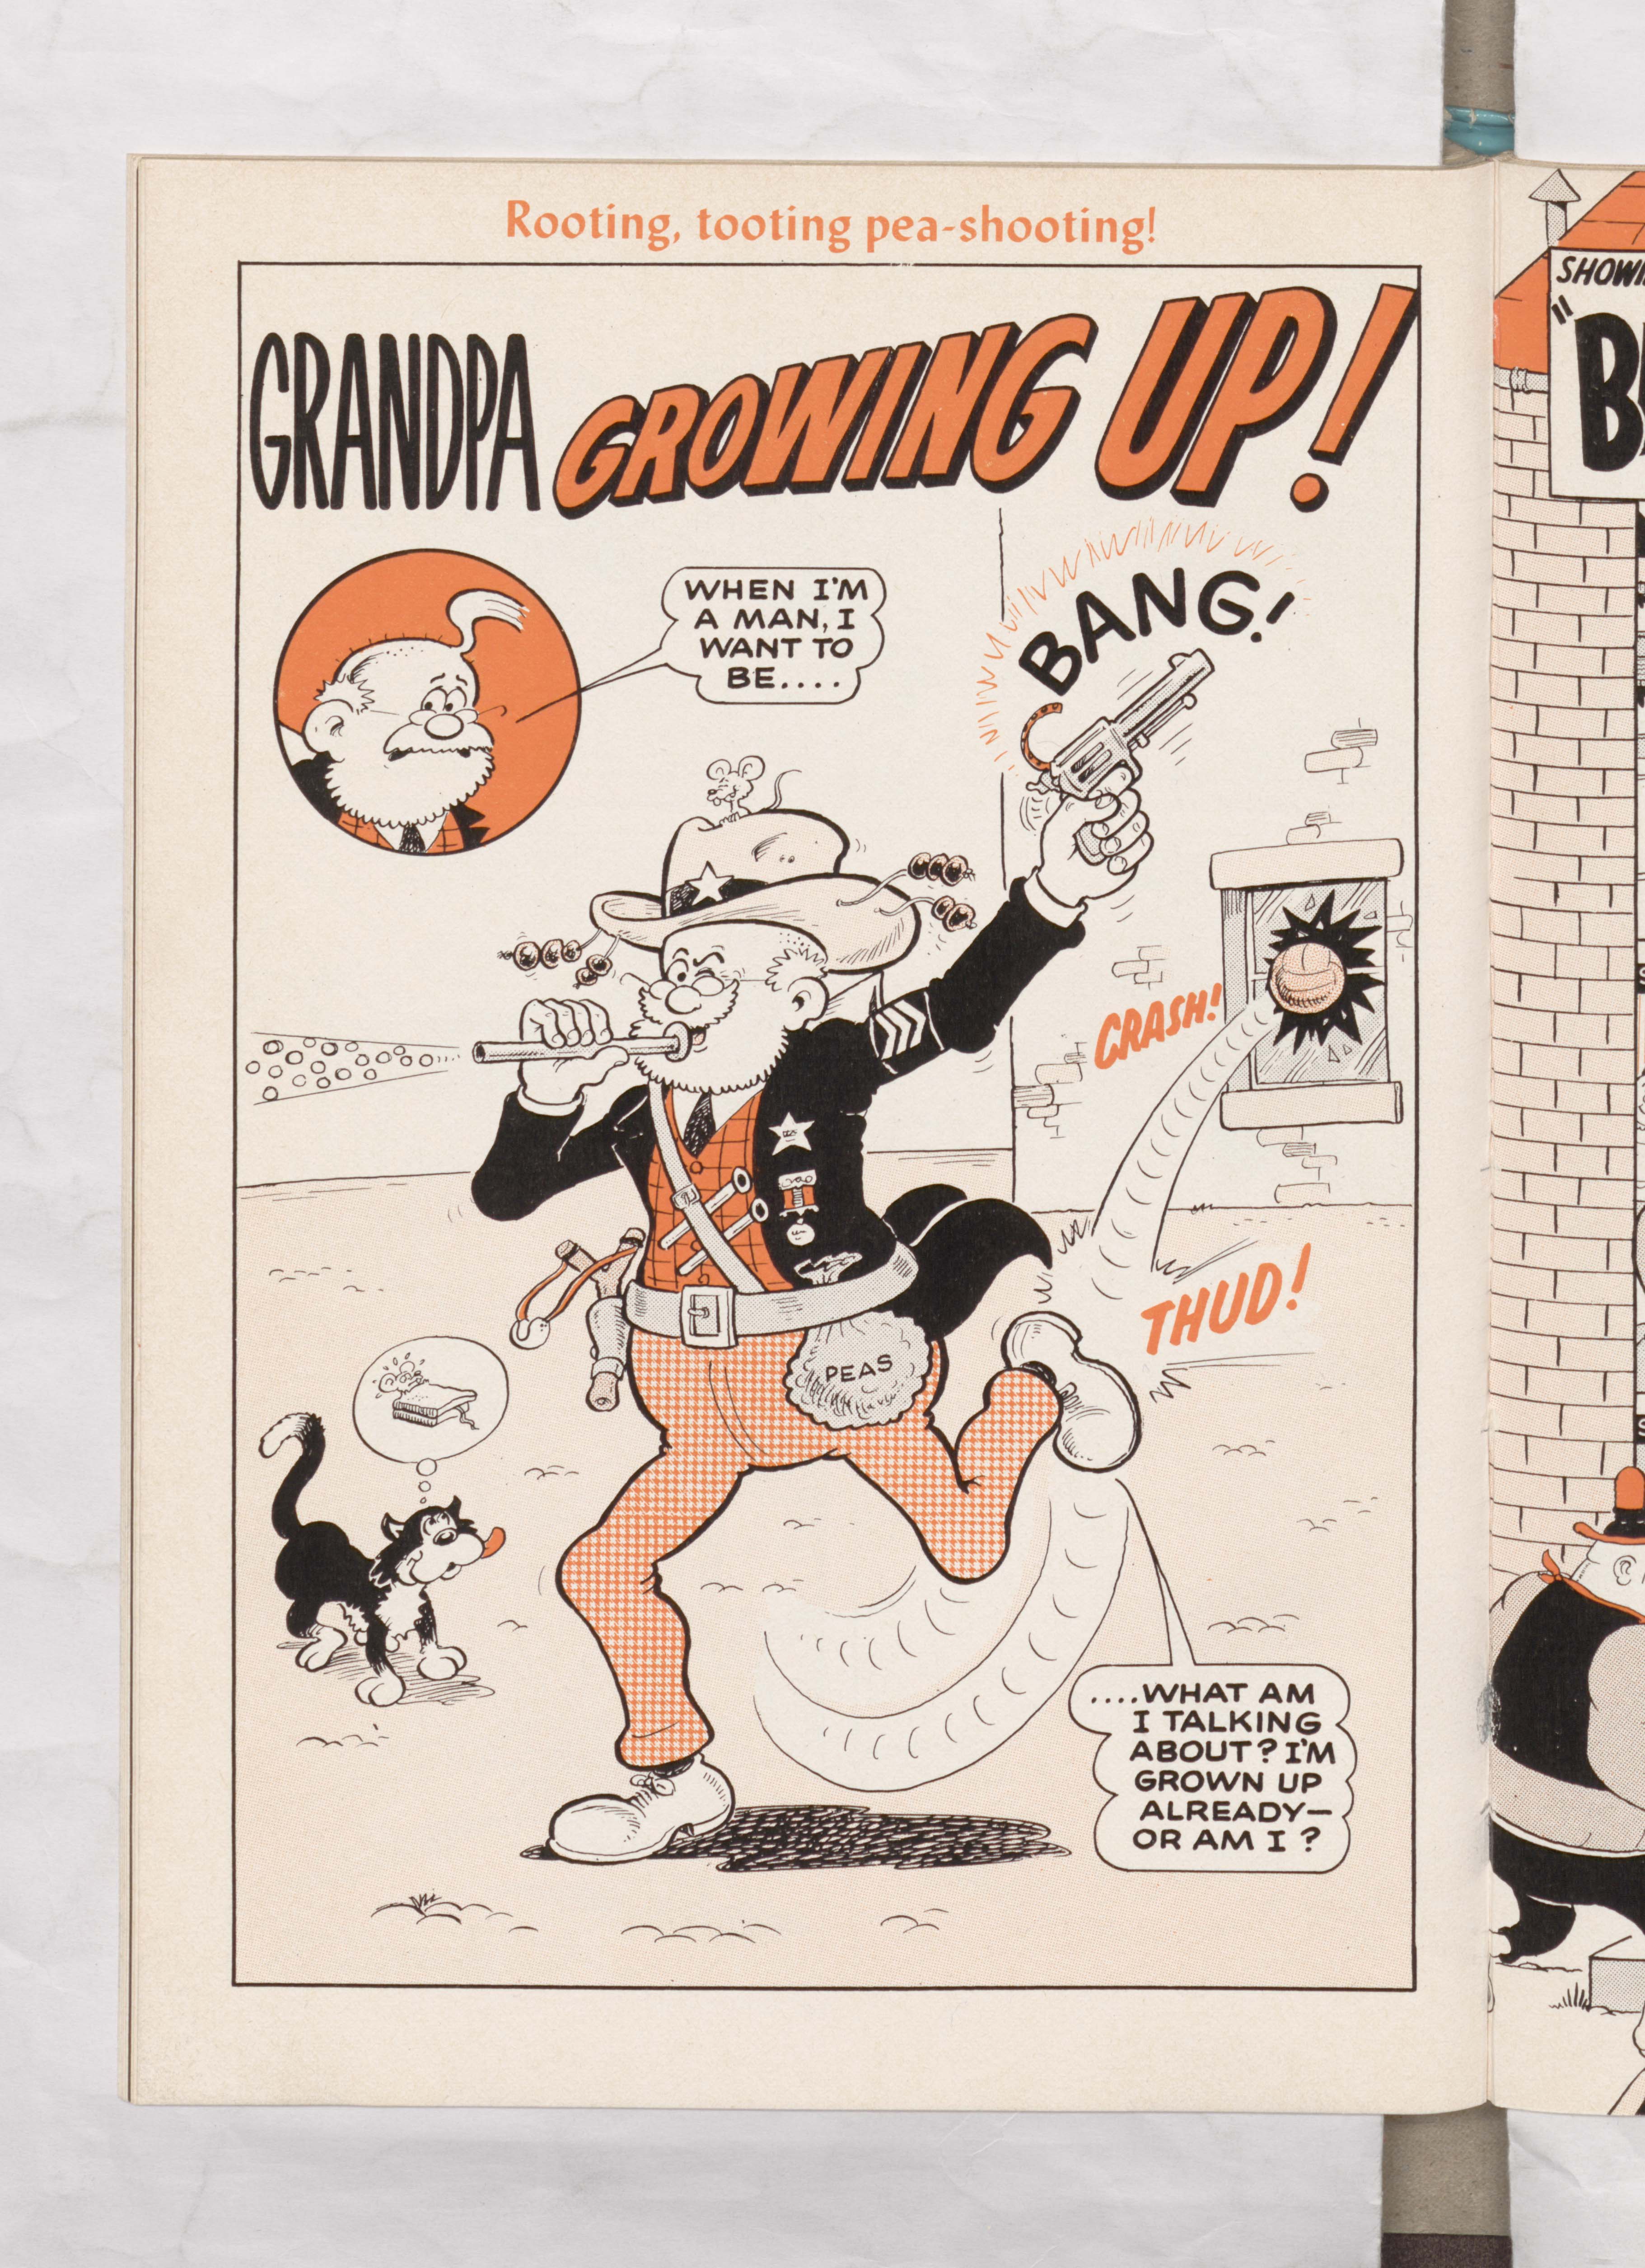 Beano Book 1976 Annual - Grandpa grows up